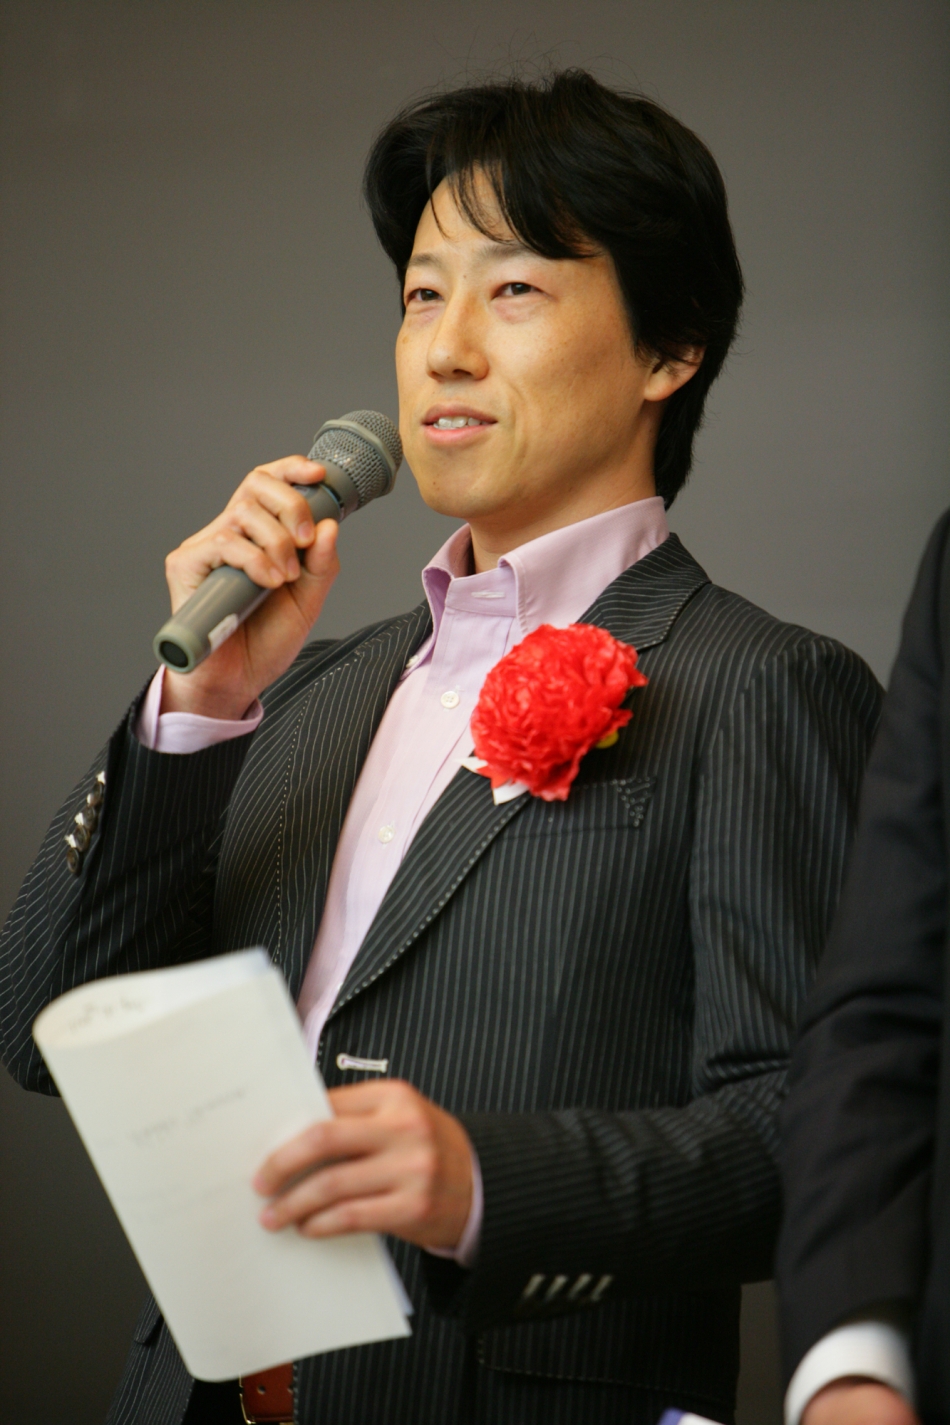 First Place Winner, Naoki Tamura, 2011